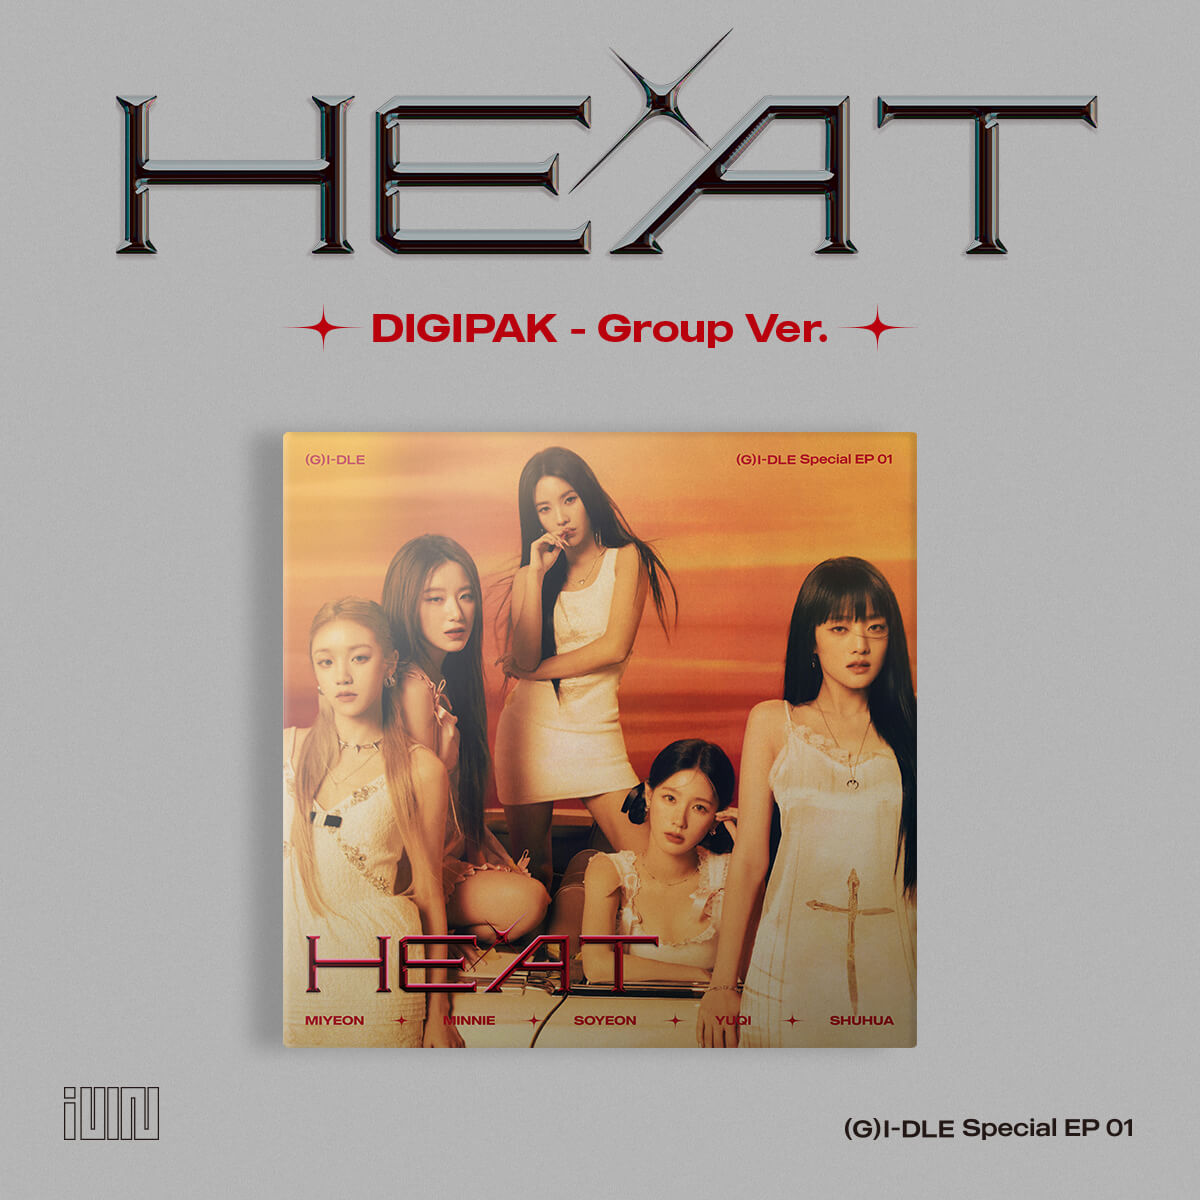 (G)I-DLE Special EP Album HEAT - Digipak Group Version